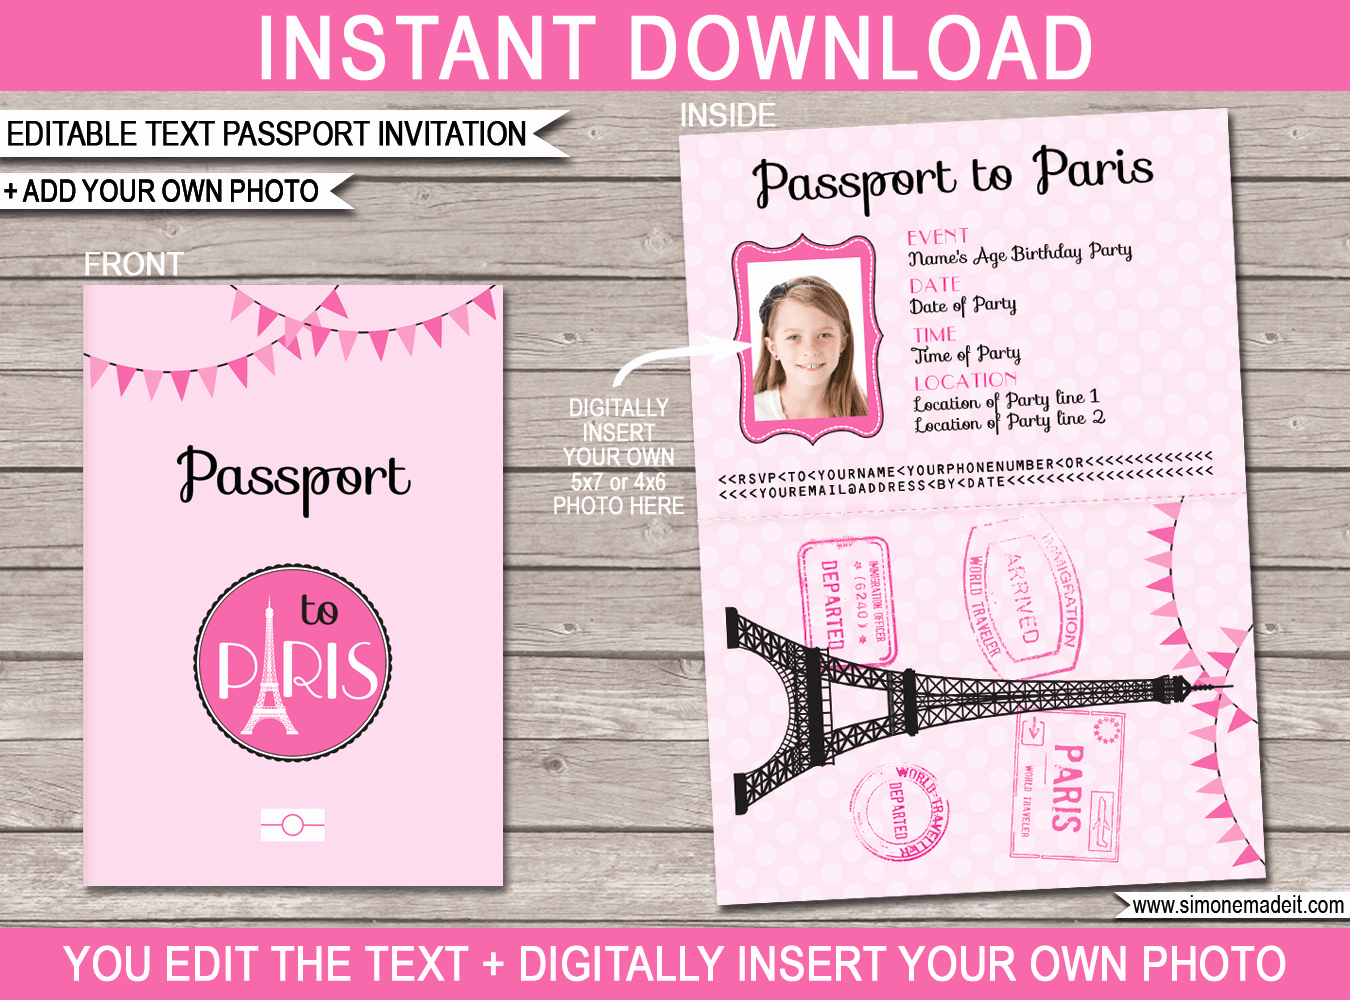 Paris Passport Invitation Template Luxury Paris Passport Invitation Template with Photo